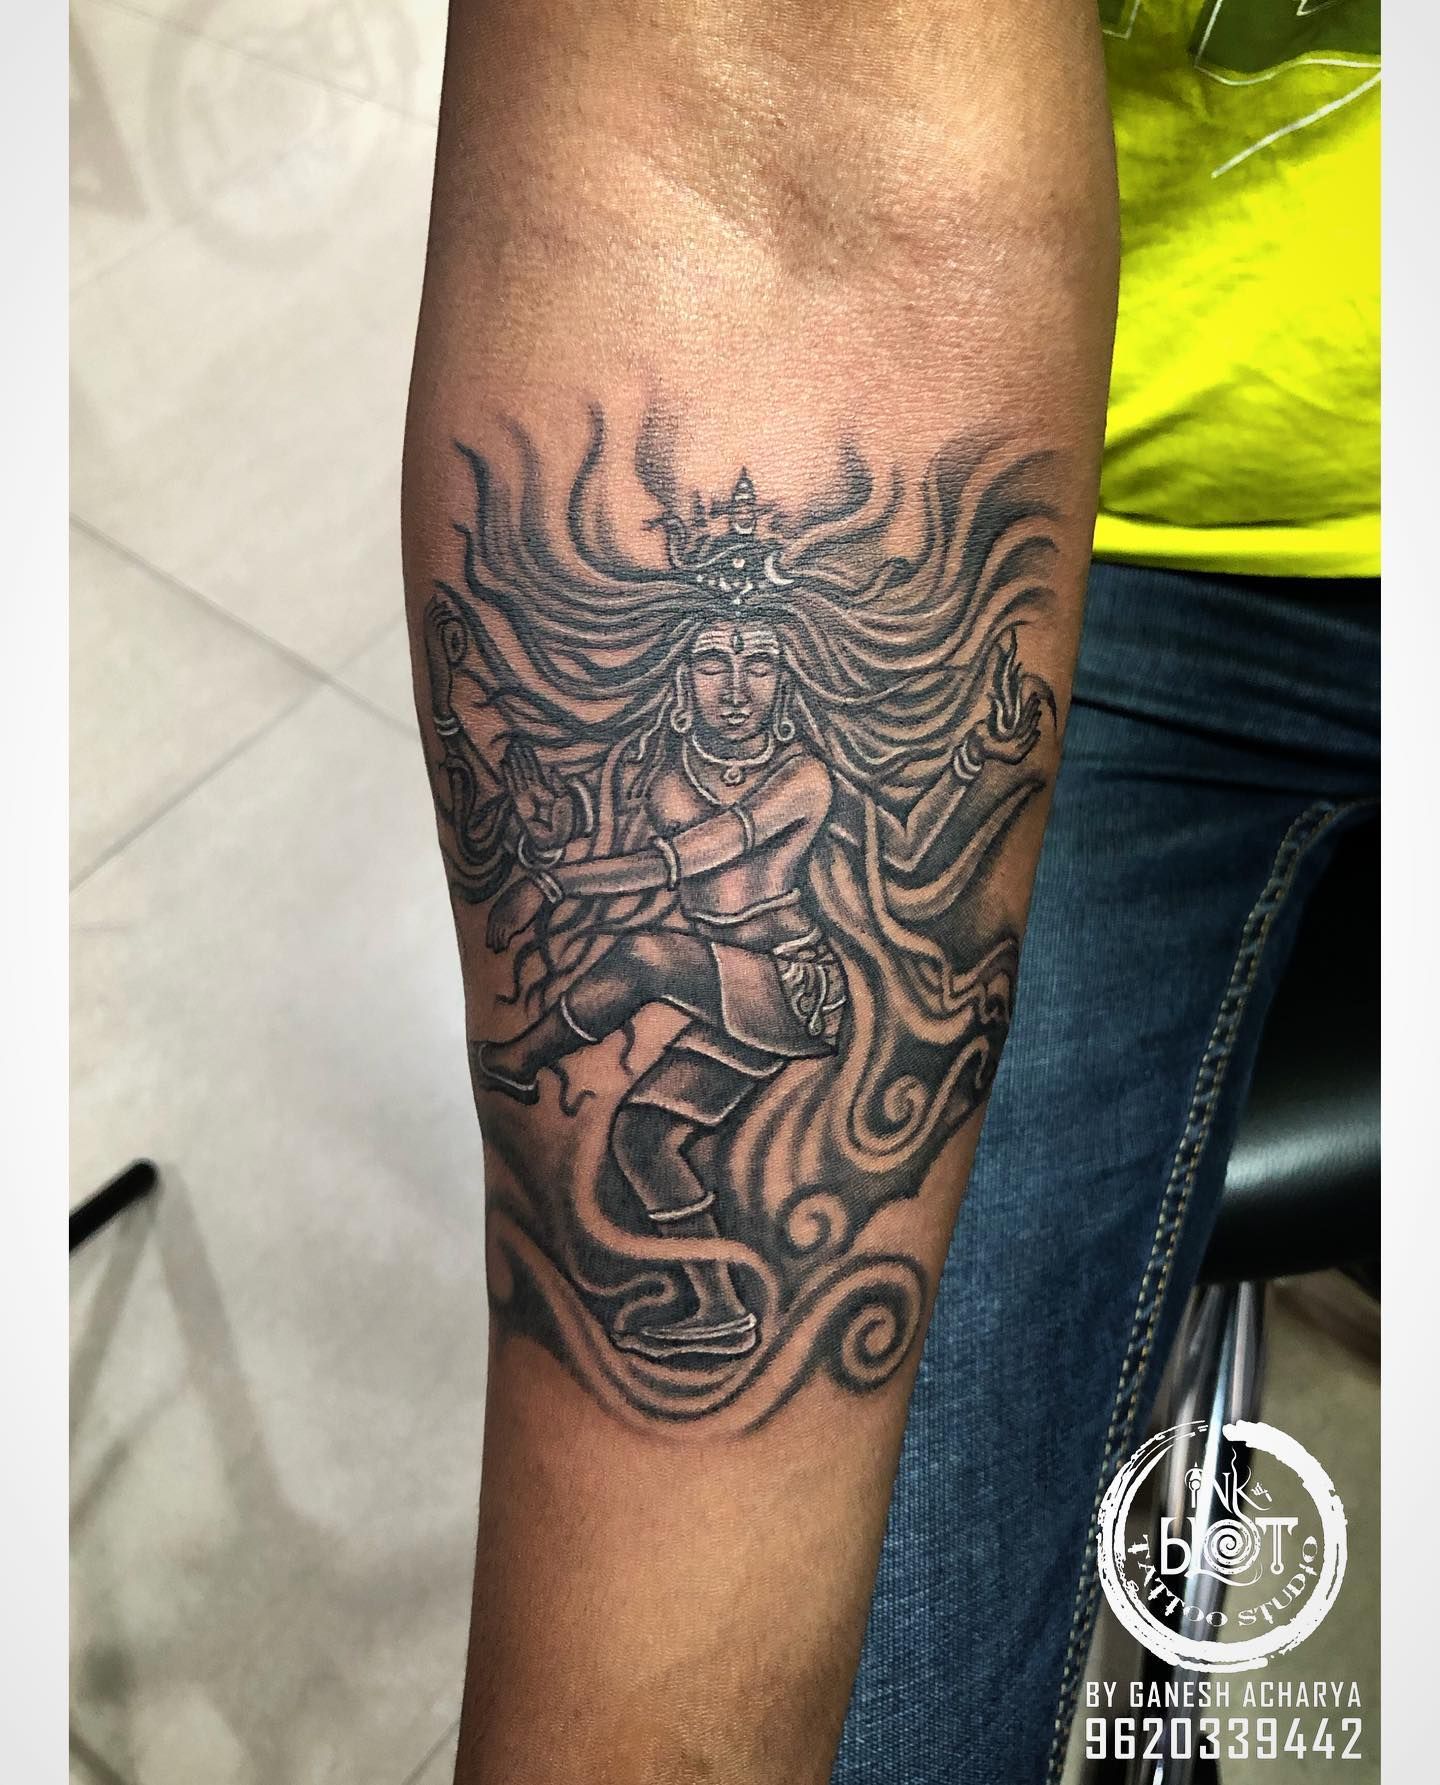 Adi's tattoo House - Rangrej - Shiva Tandava tattoo with mantra.. hope u  guys like it for more information o appointment plz dm us o contact us on  9986675584 #adistattoos #adistattoostudio #adistattoo #